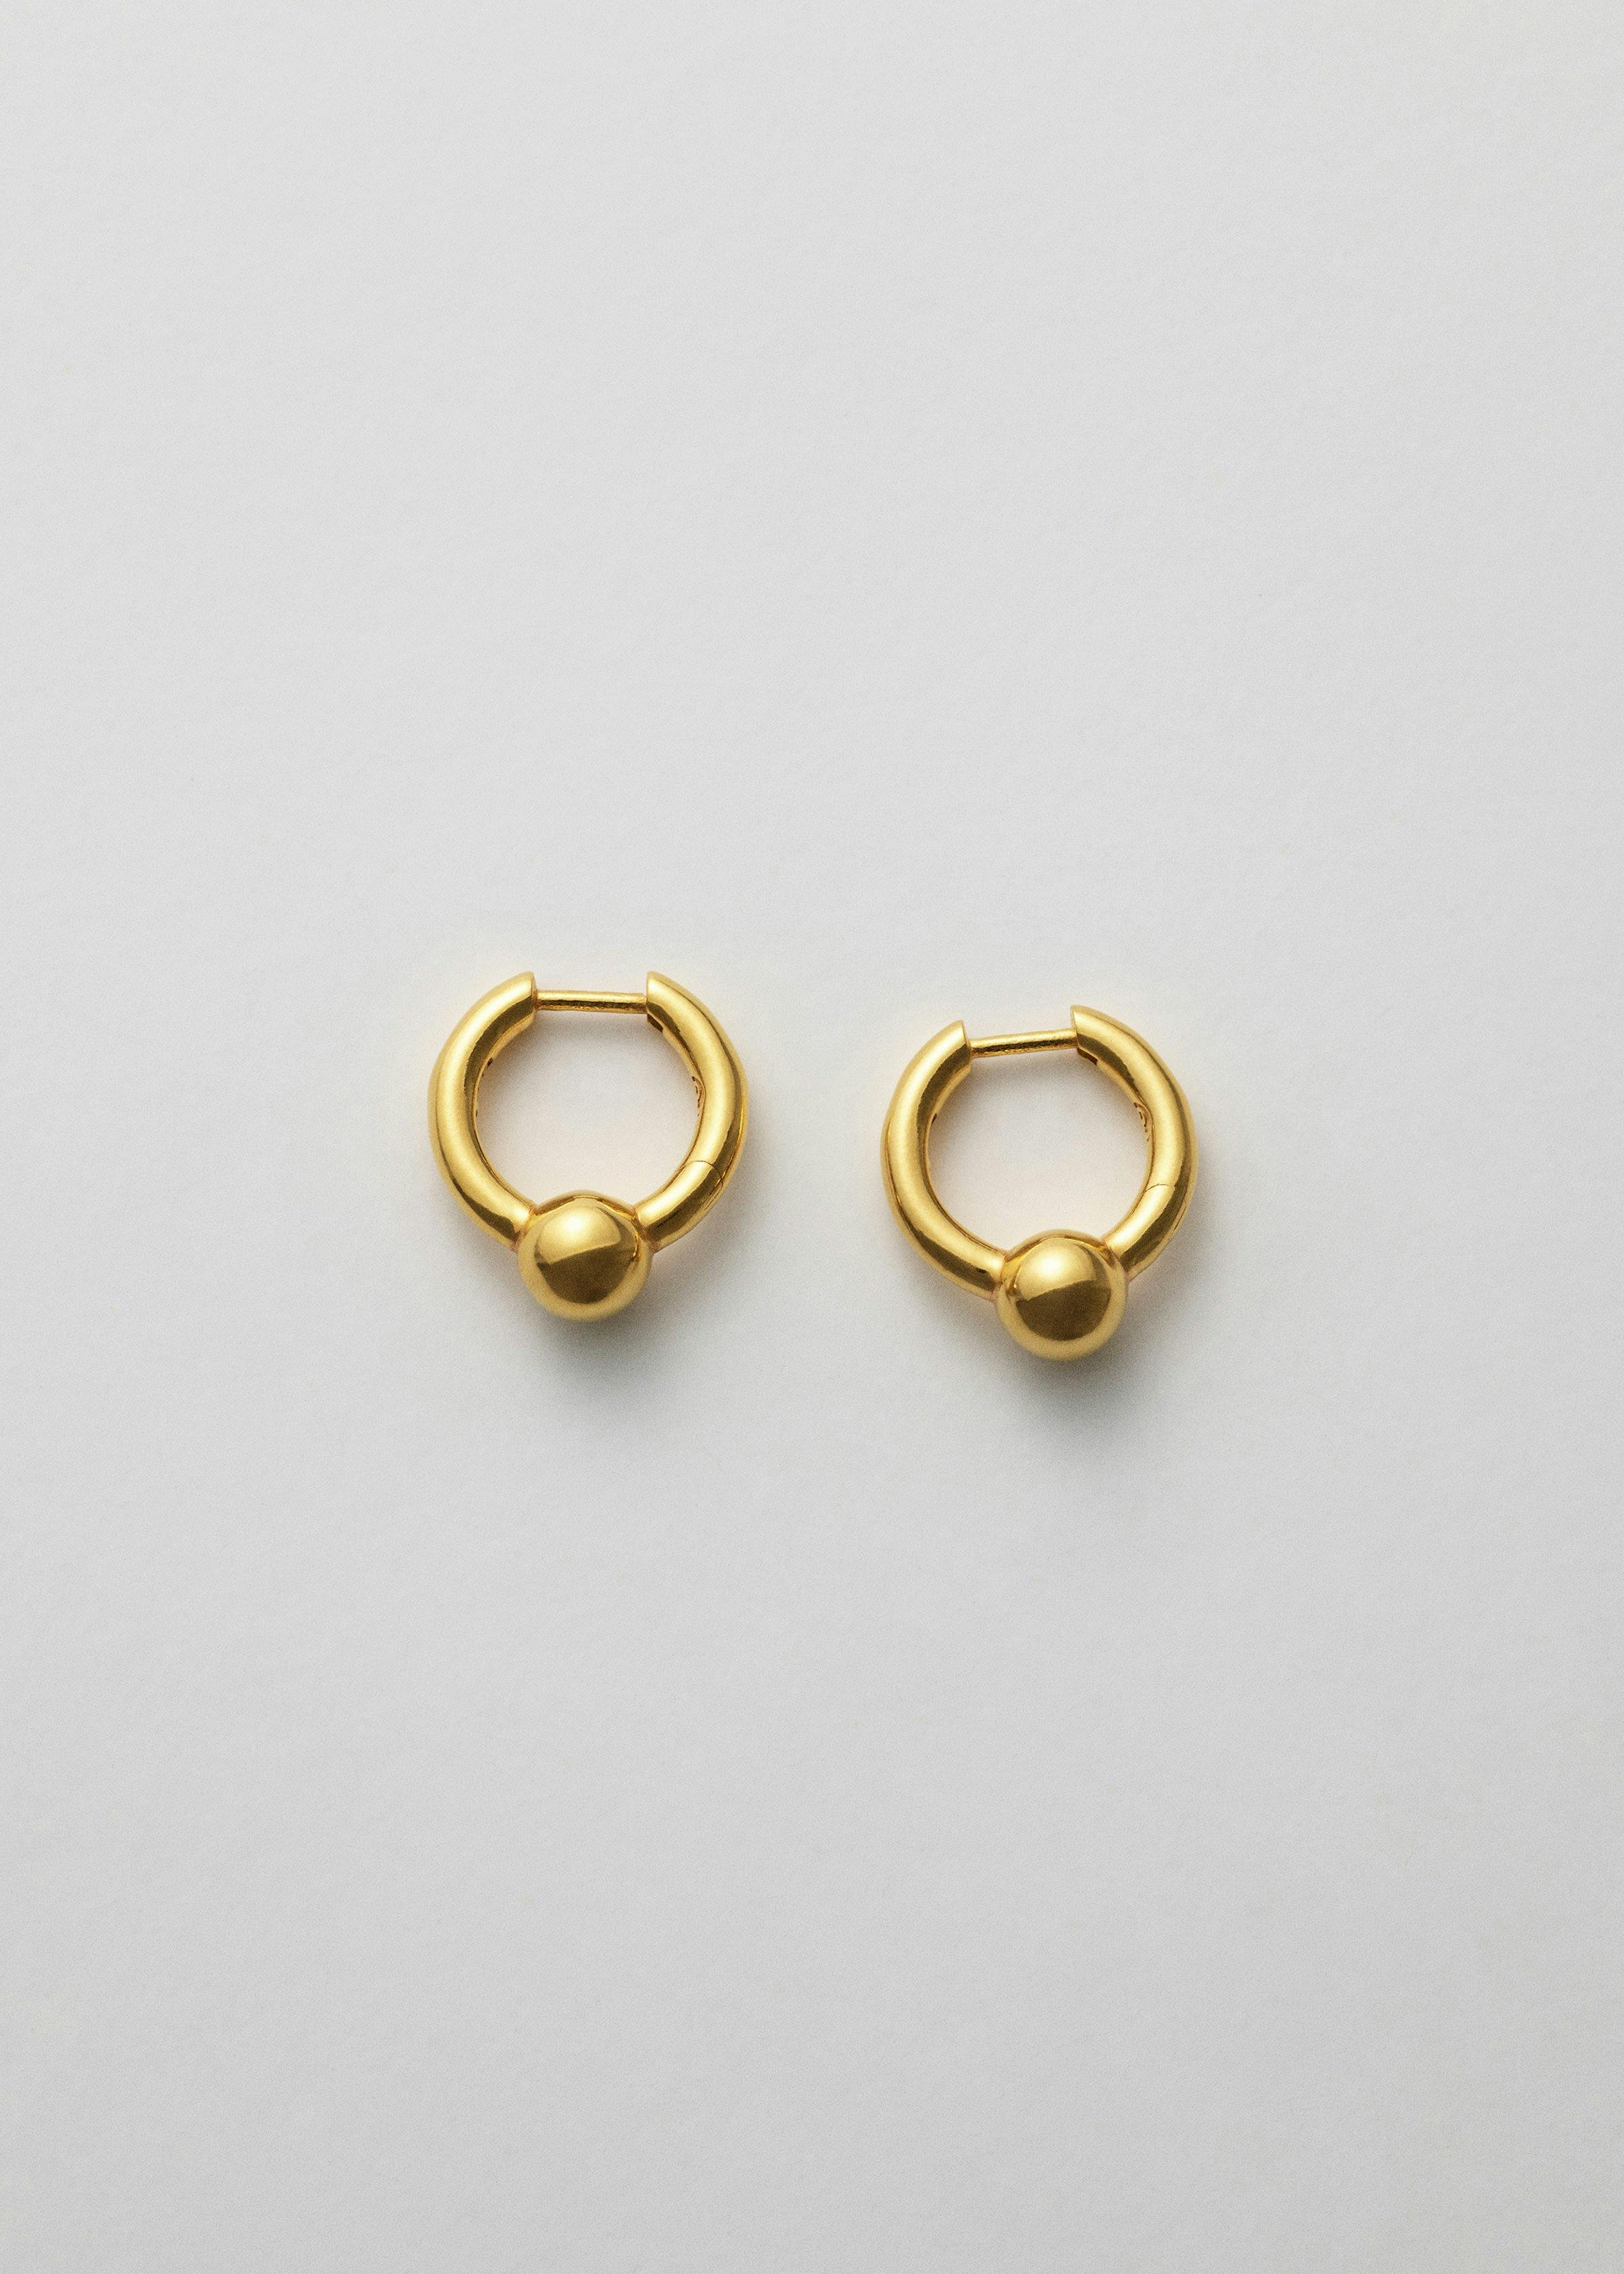 Pearl earrings small